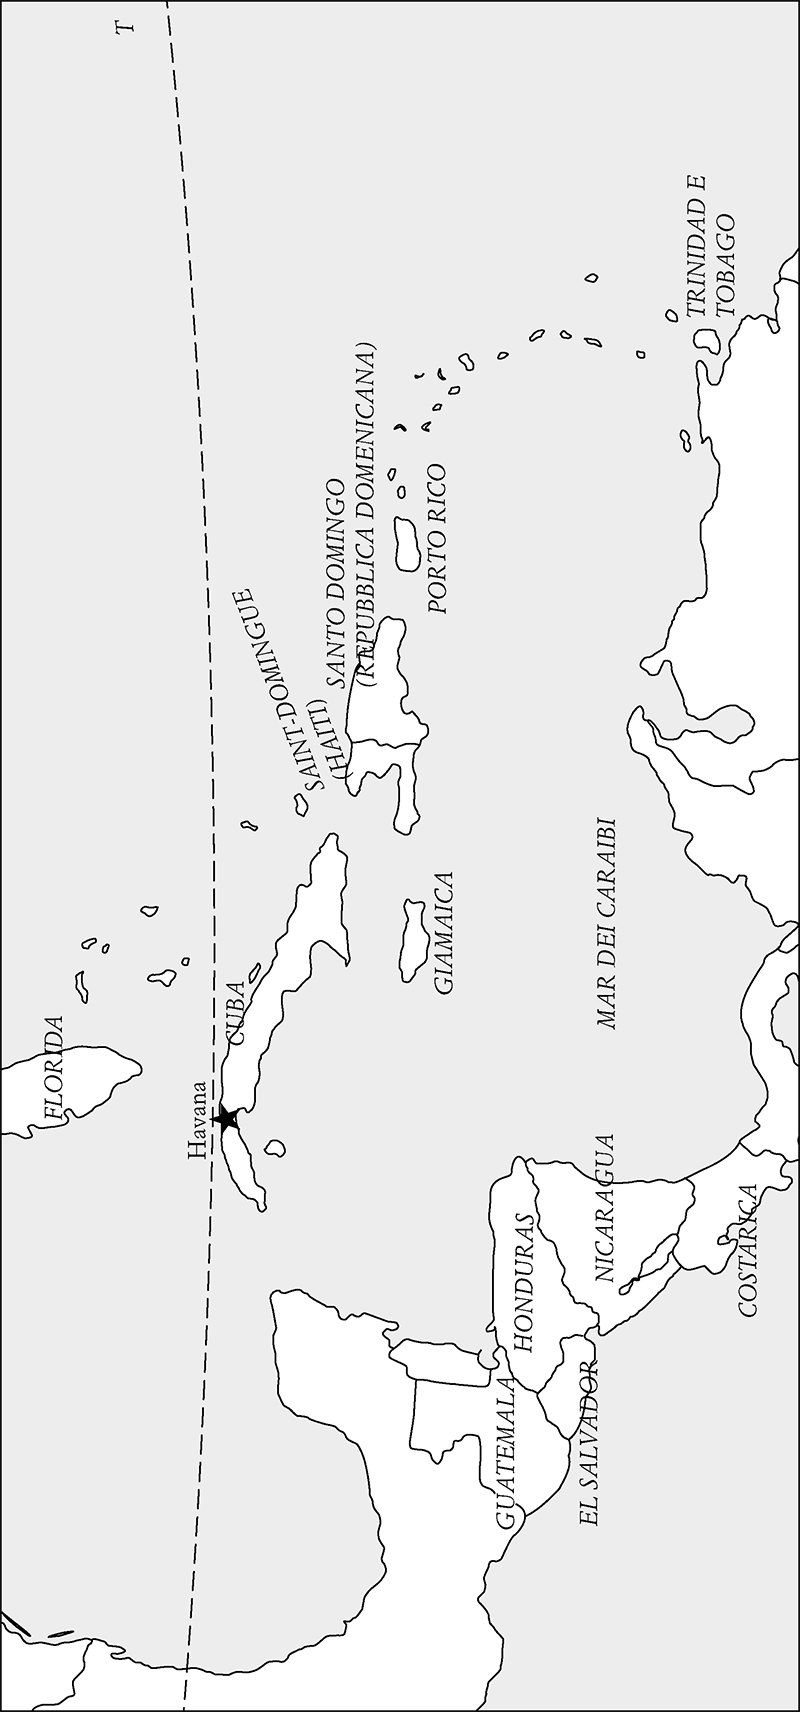 Mappa 1. Saint-Domingue/Haiti e i Caraibi.